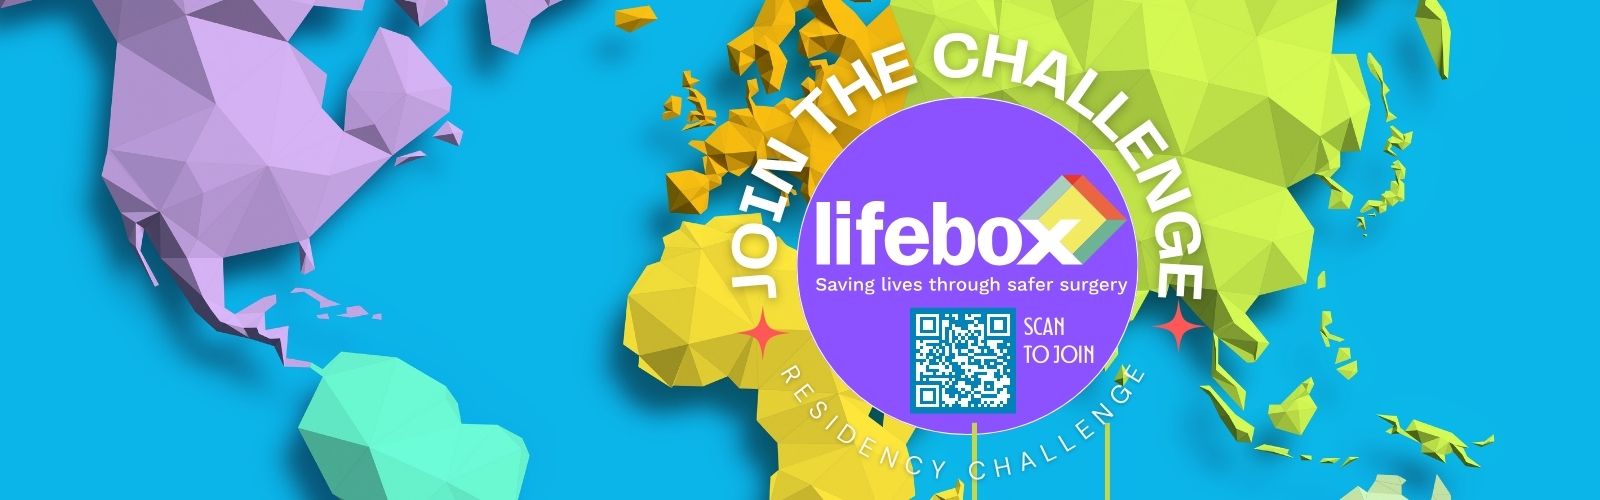 lifebox banner